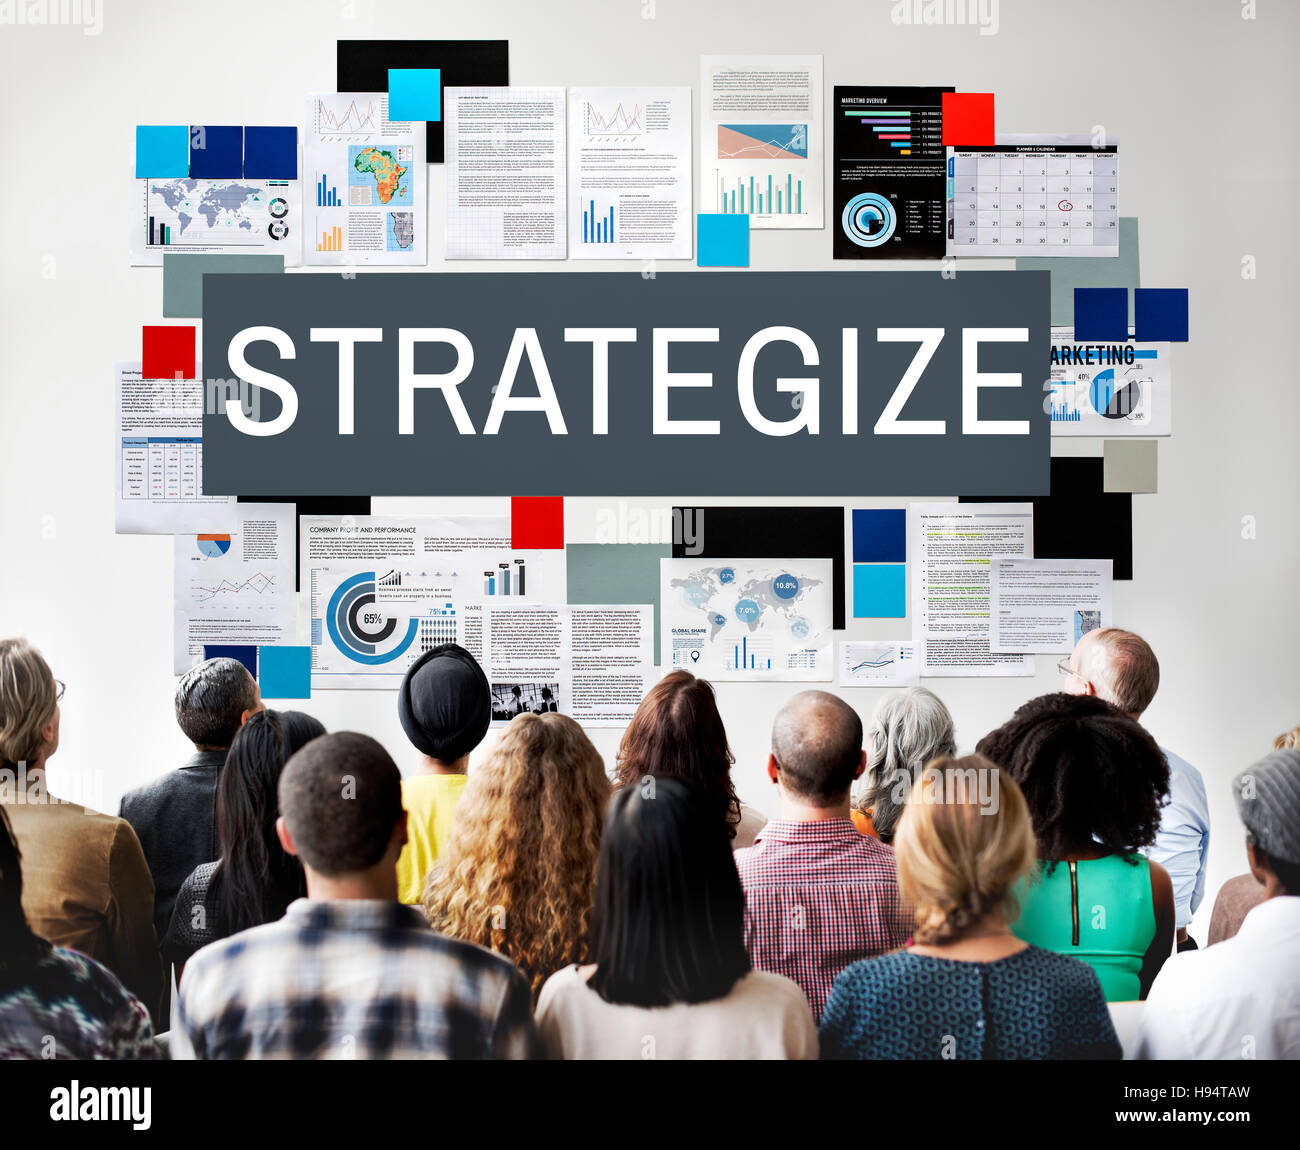 Strategy Strategize Strategic Tactics Planning Concept Stock Photo